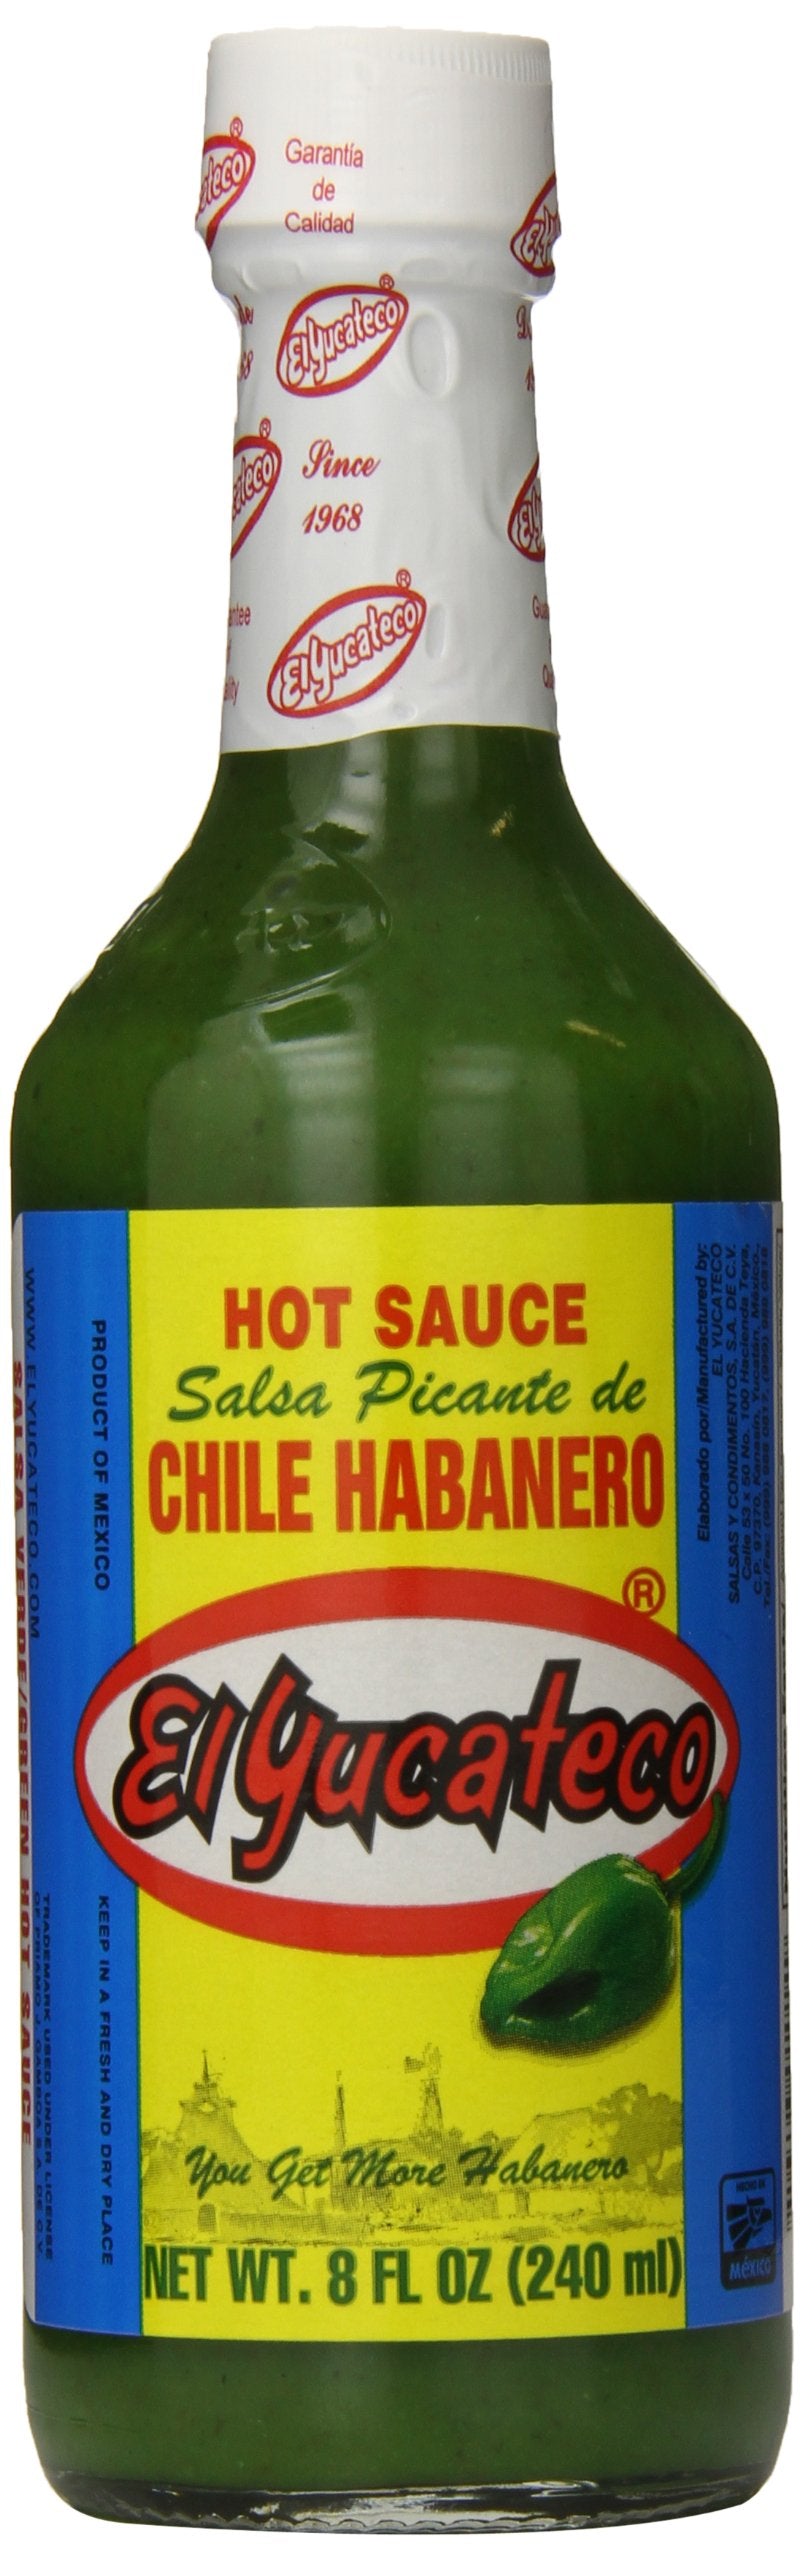 El Yucateco Yucateco Green Chile Habanero Sauce